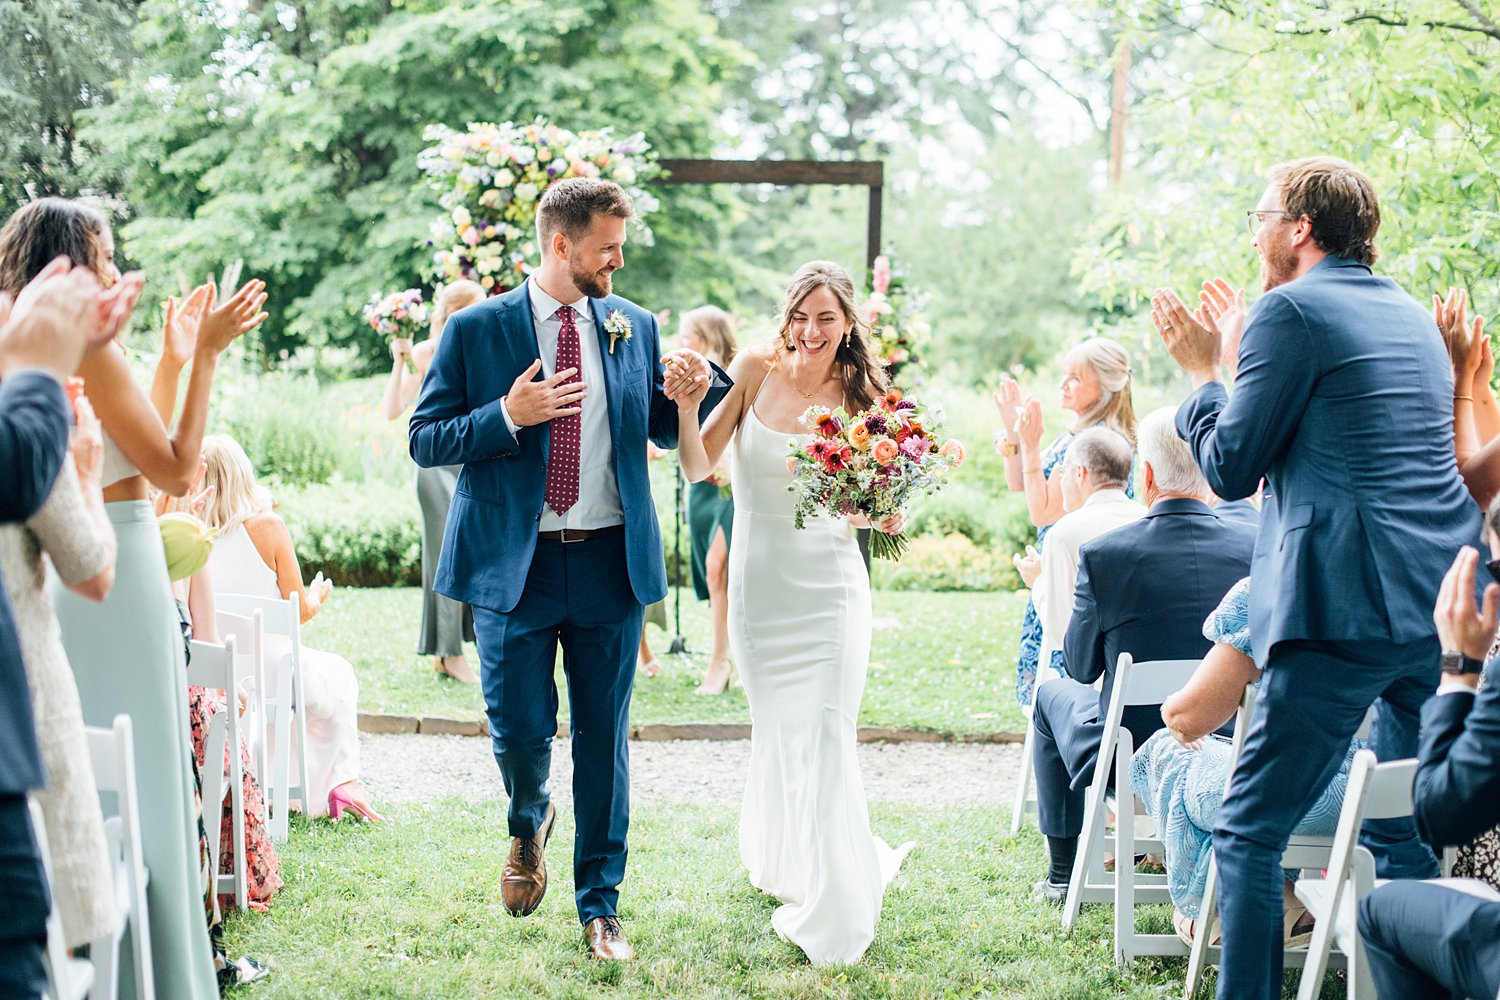 Leigh + Alex - Bartram's Garden Wedding - Philadelphia Wedding Photographer - Alison Dunn Photography photo